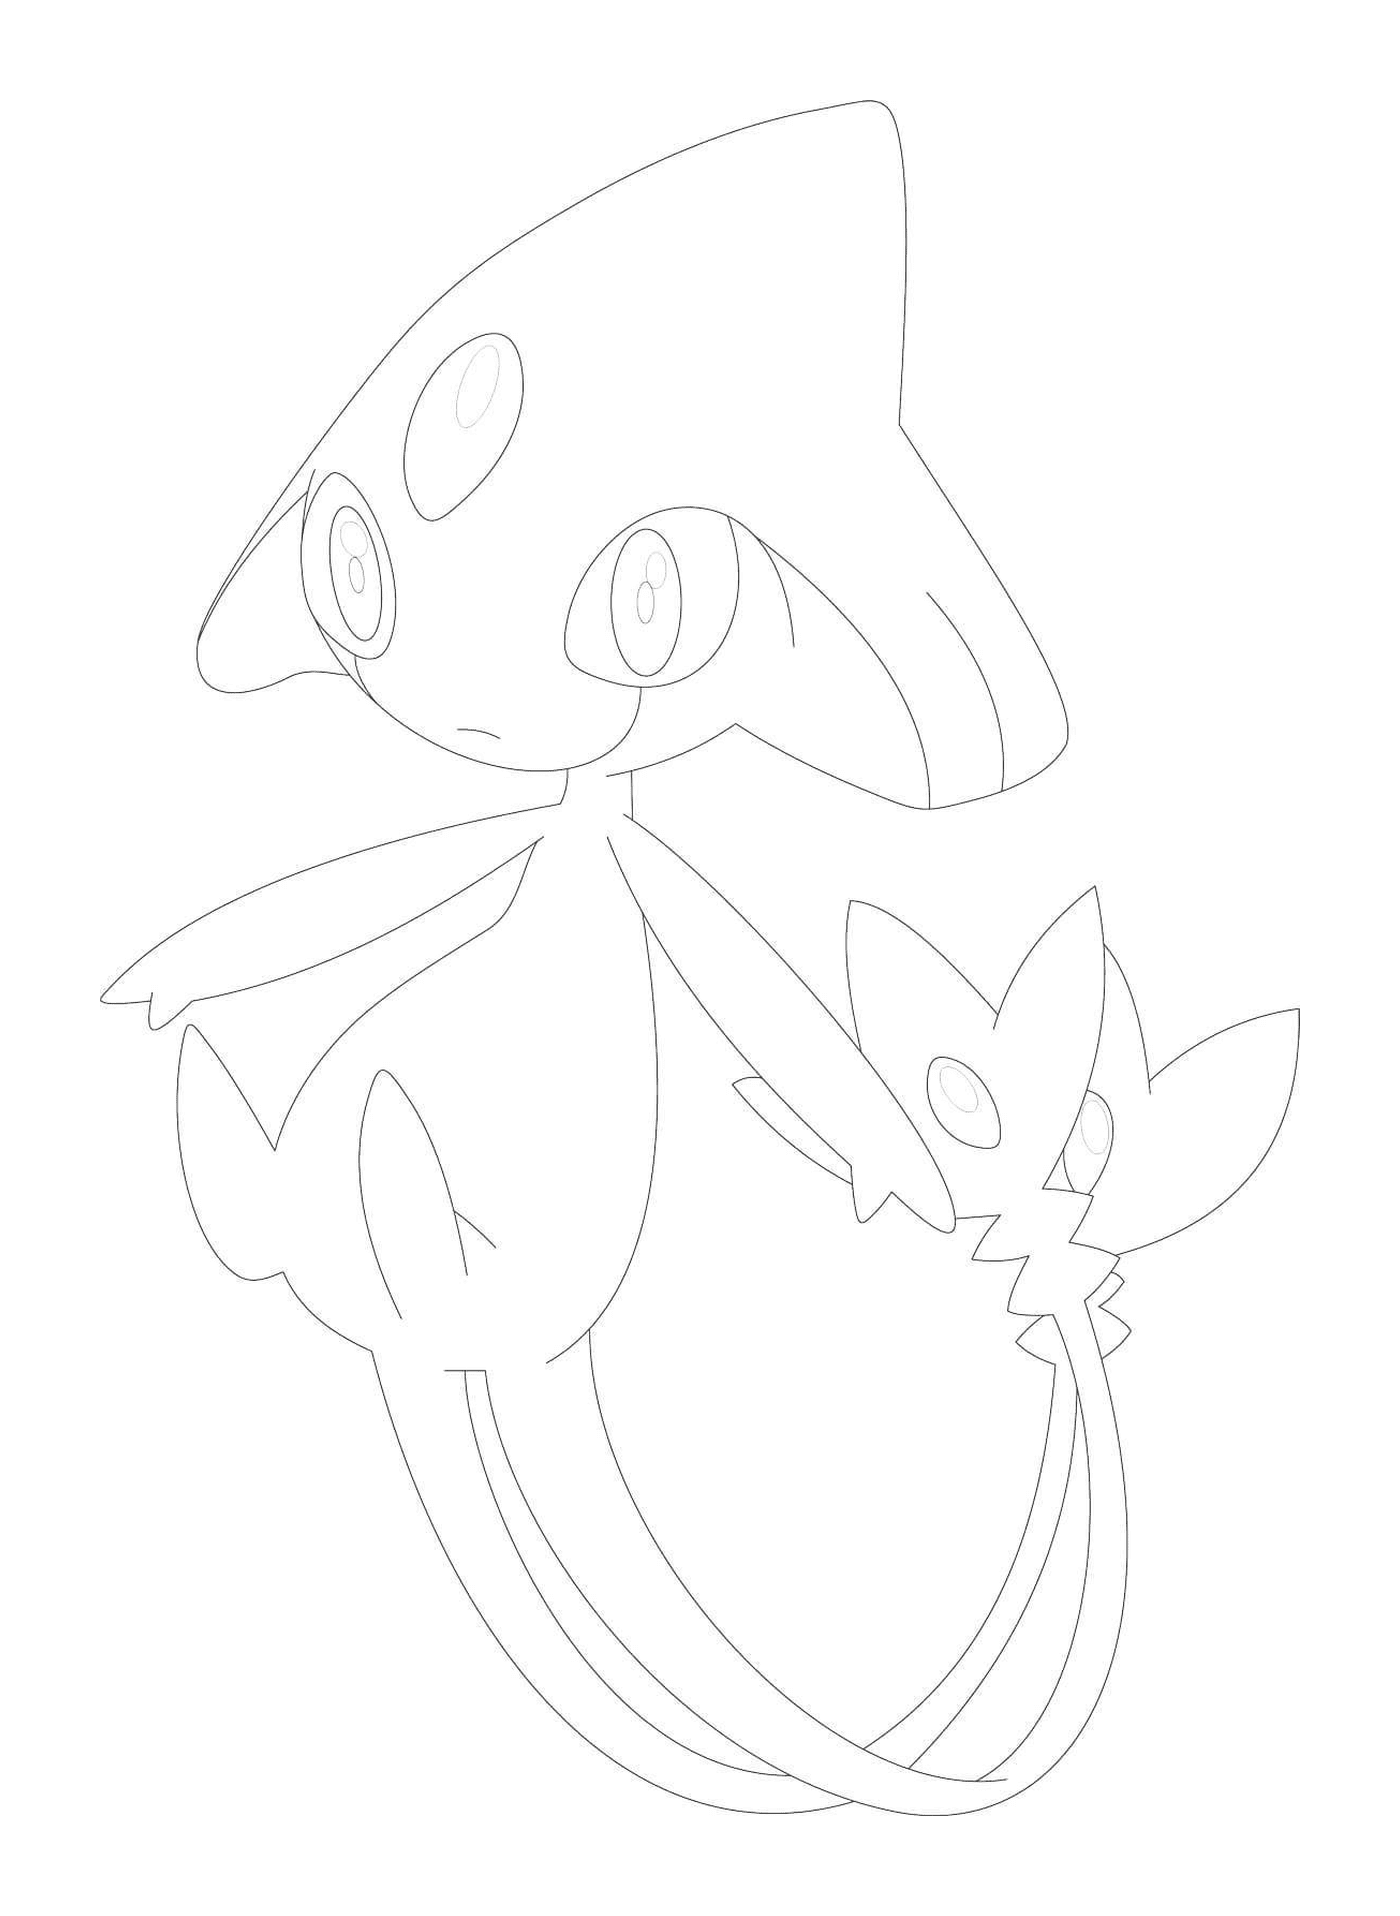  Pokémon Céfadet desenhado 